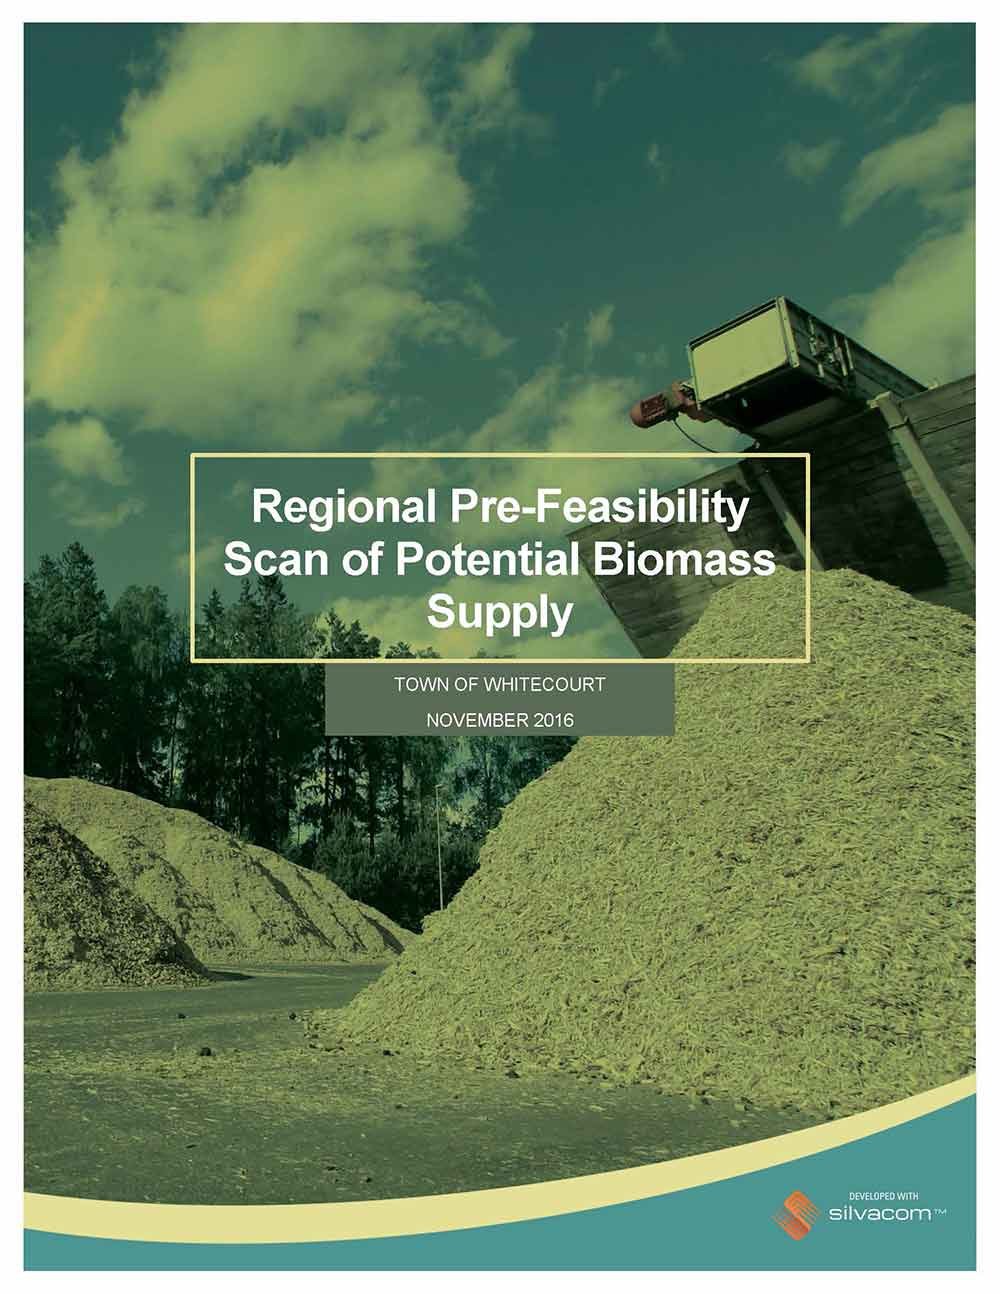 Whitecourt Regional Pre-Feasibility Scan of Potential Biomass Supply